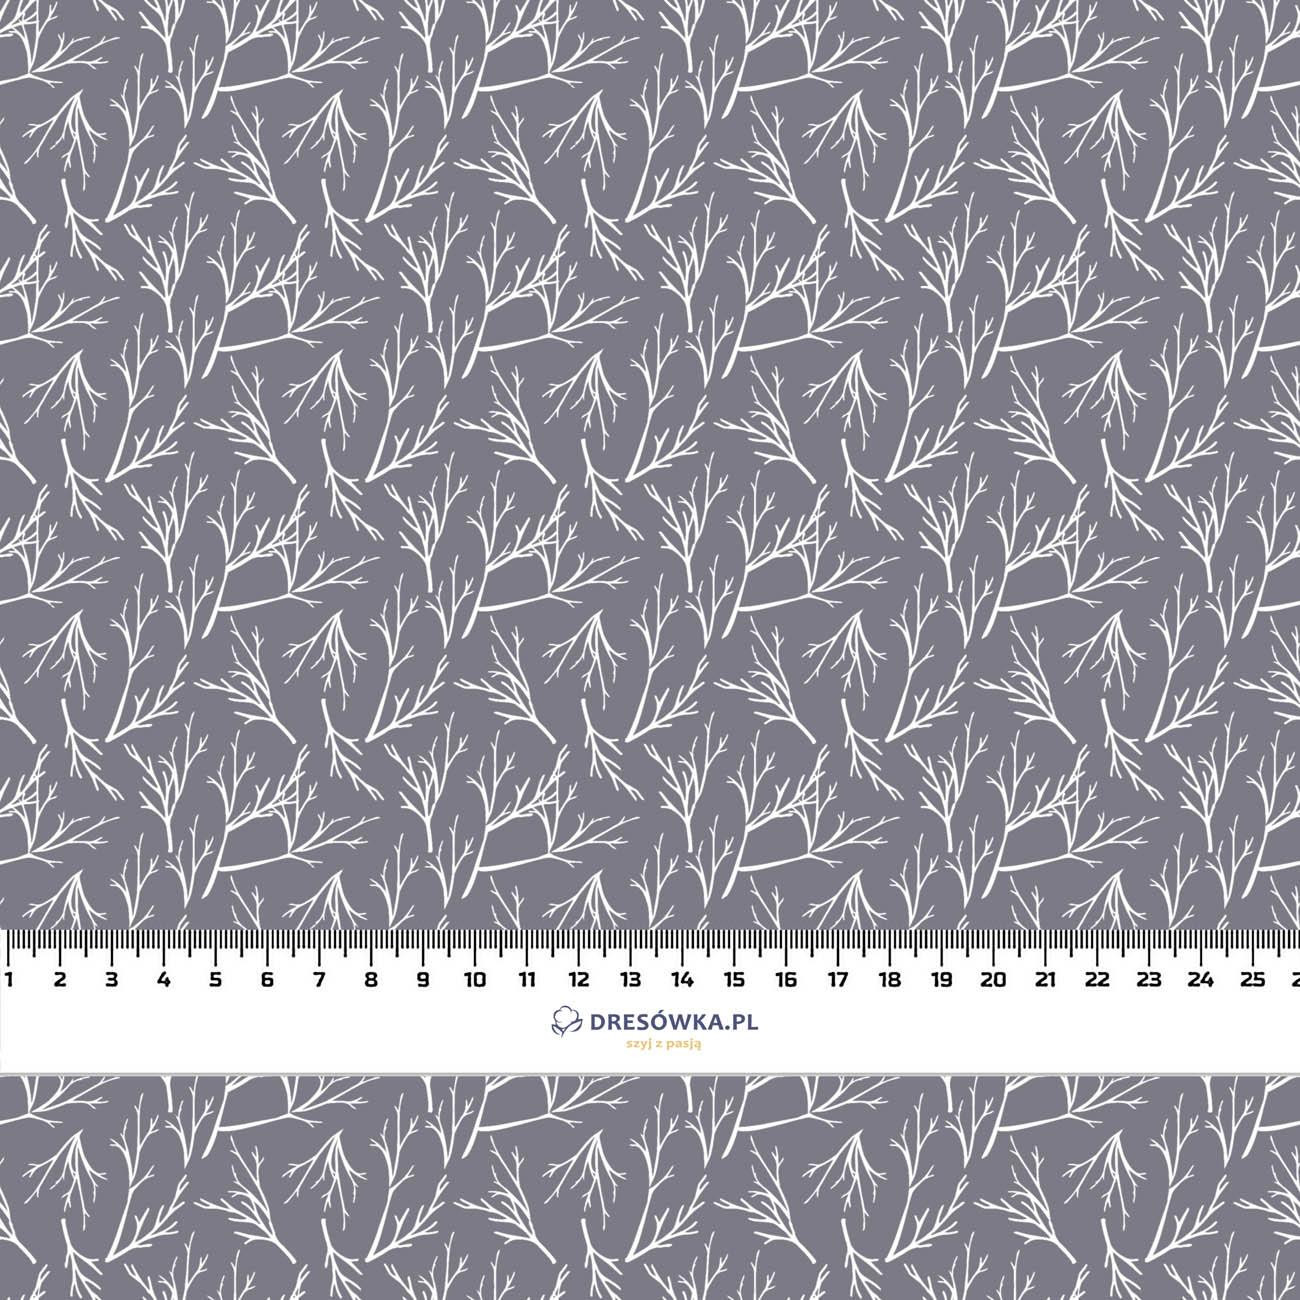 TWIGS pat. 2 (WINTER TIME) / grey - Waterproof woven fabric